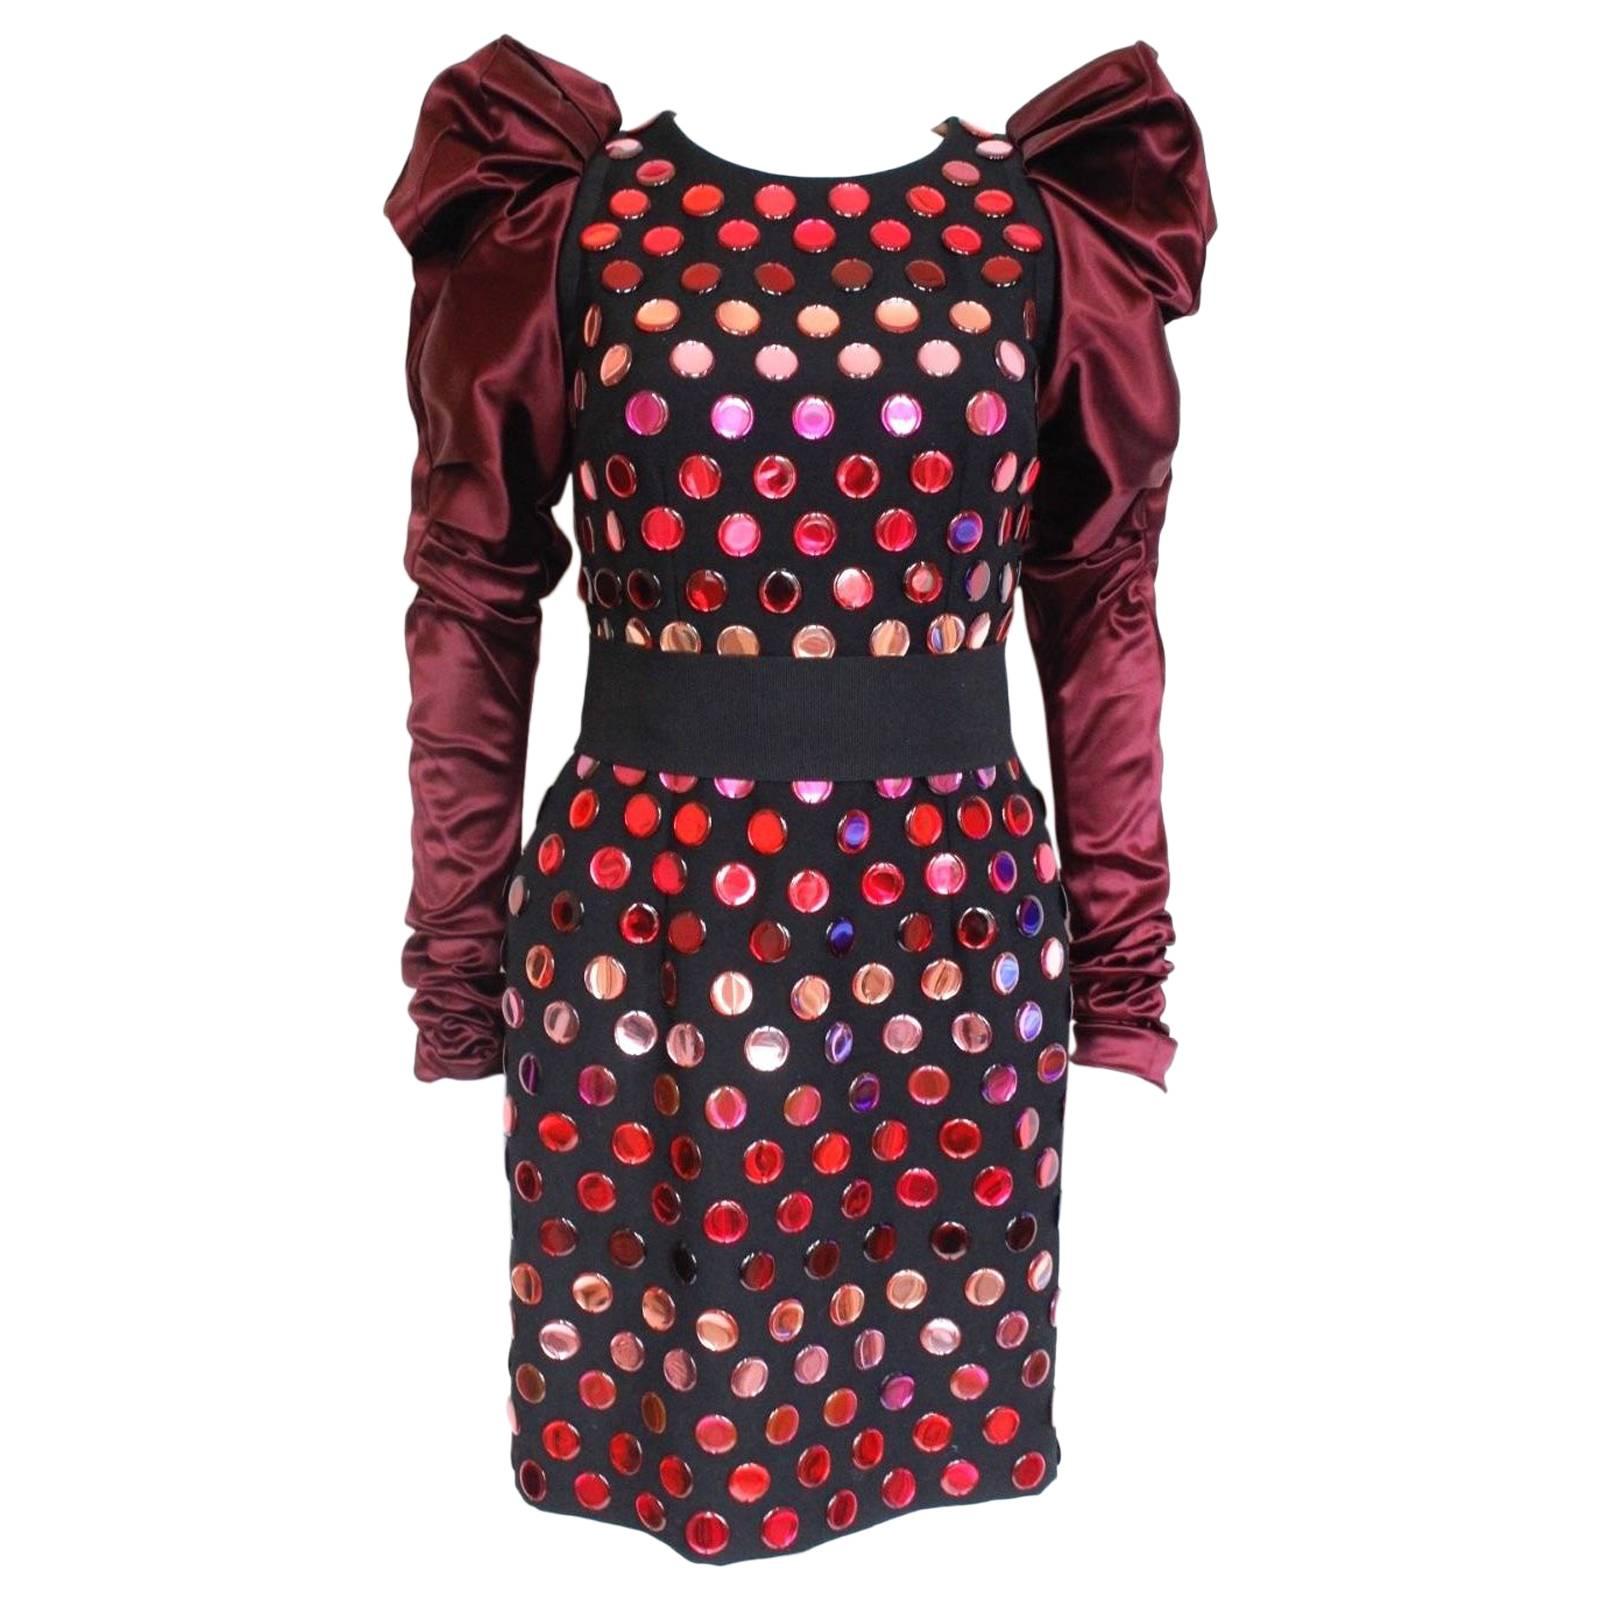 Dolce & Gabbana Burgundy Disk "Special Piece" Fall 2009 Dress 40 uk 8  